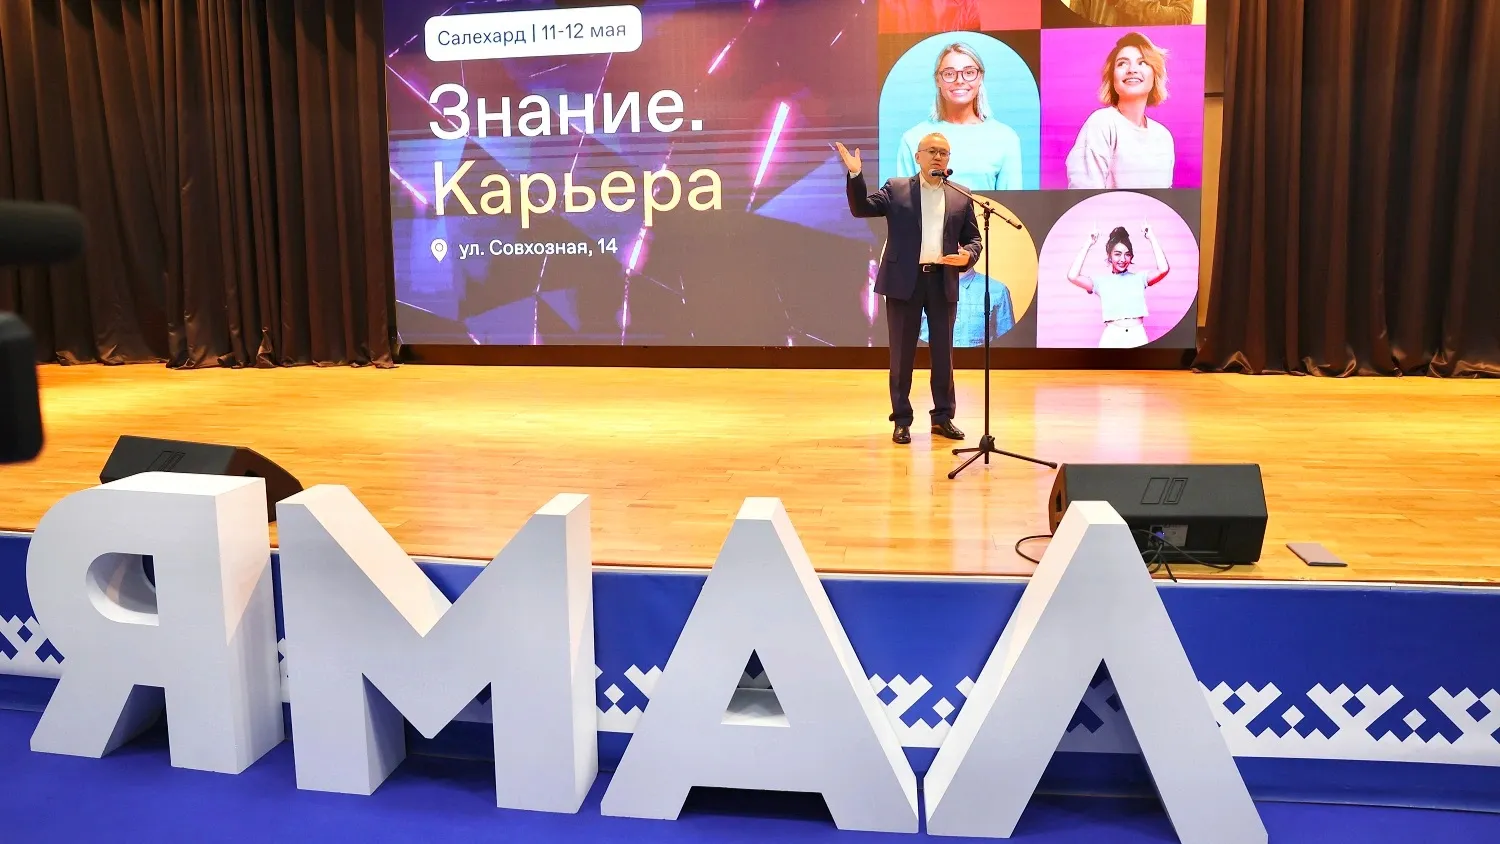 Форум проходит в Салехарде 11 и 12 мая. Фото: Андрей Ткачёв / "Ямал-Медиа"